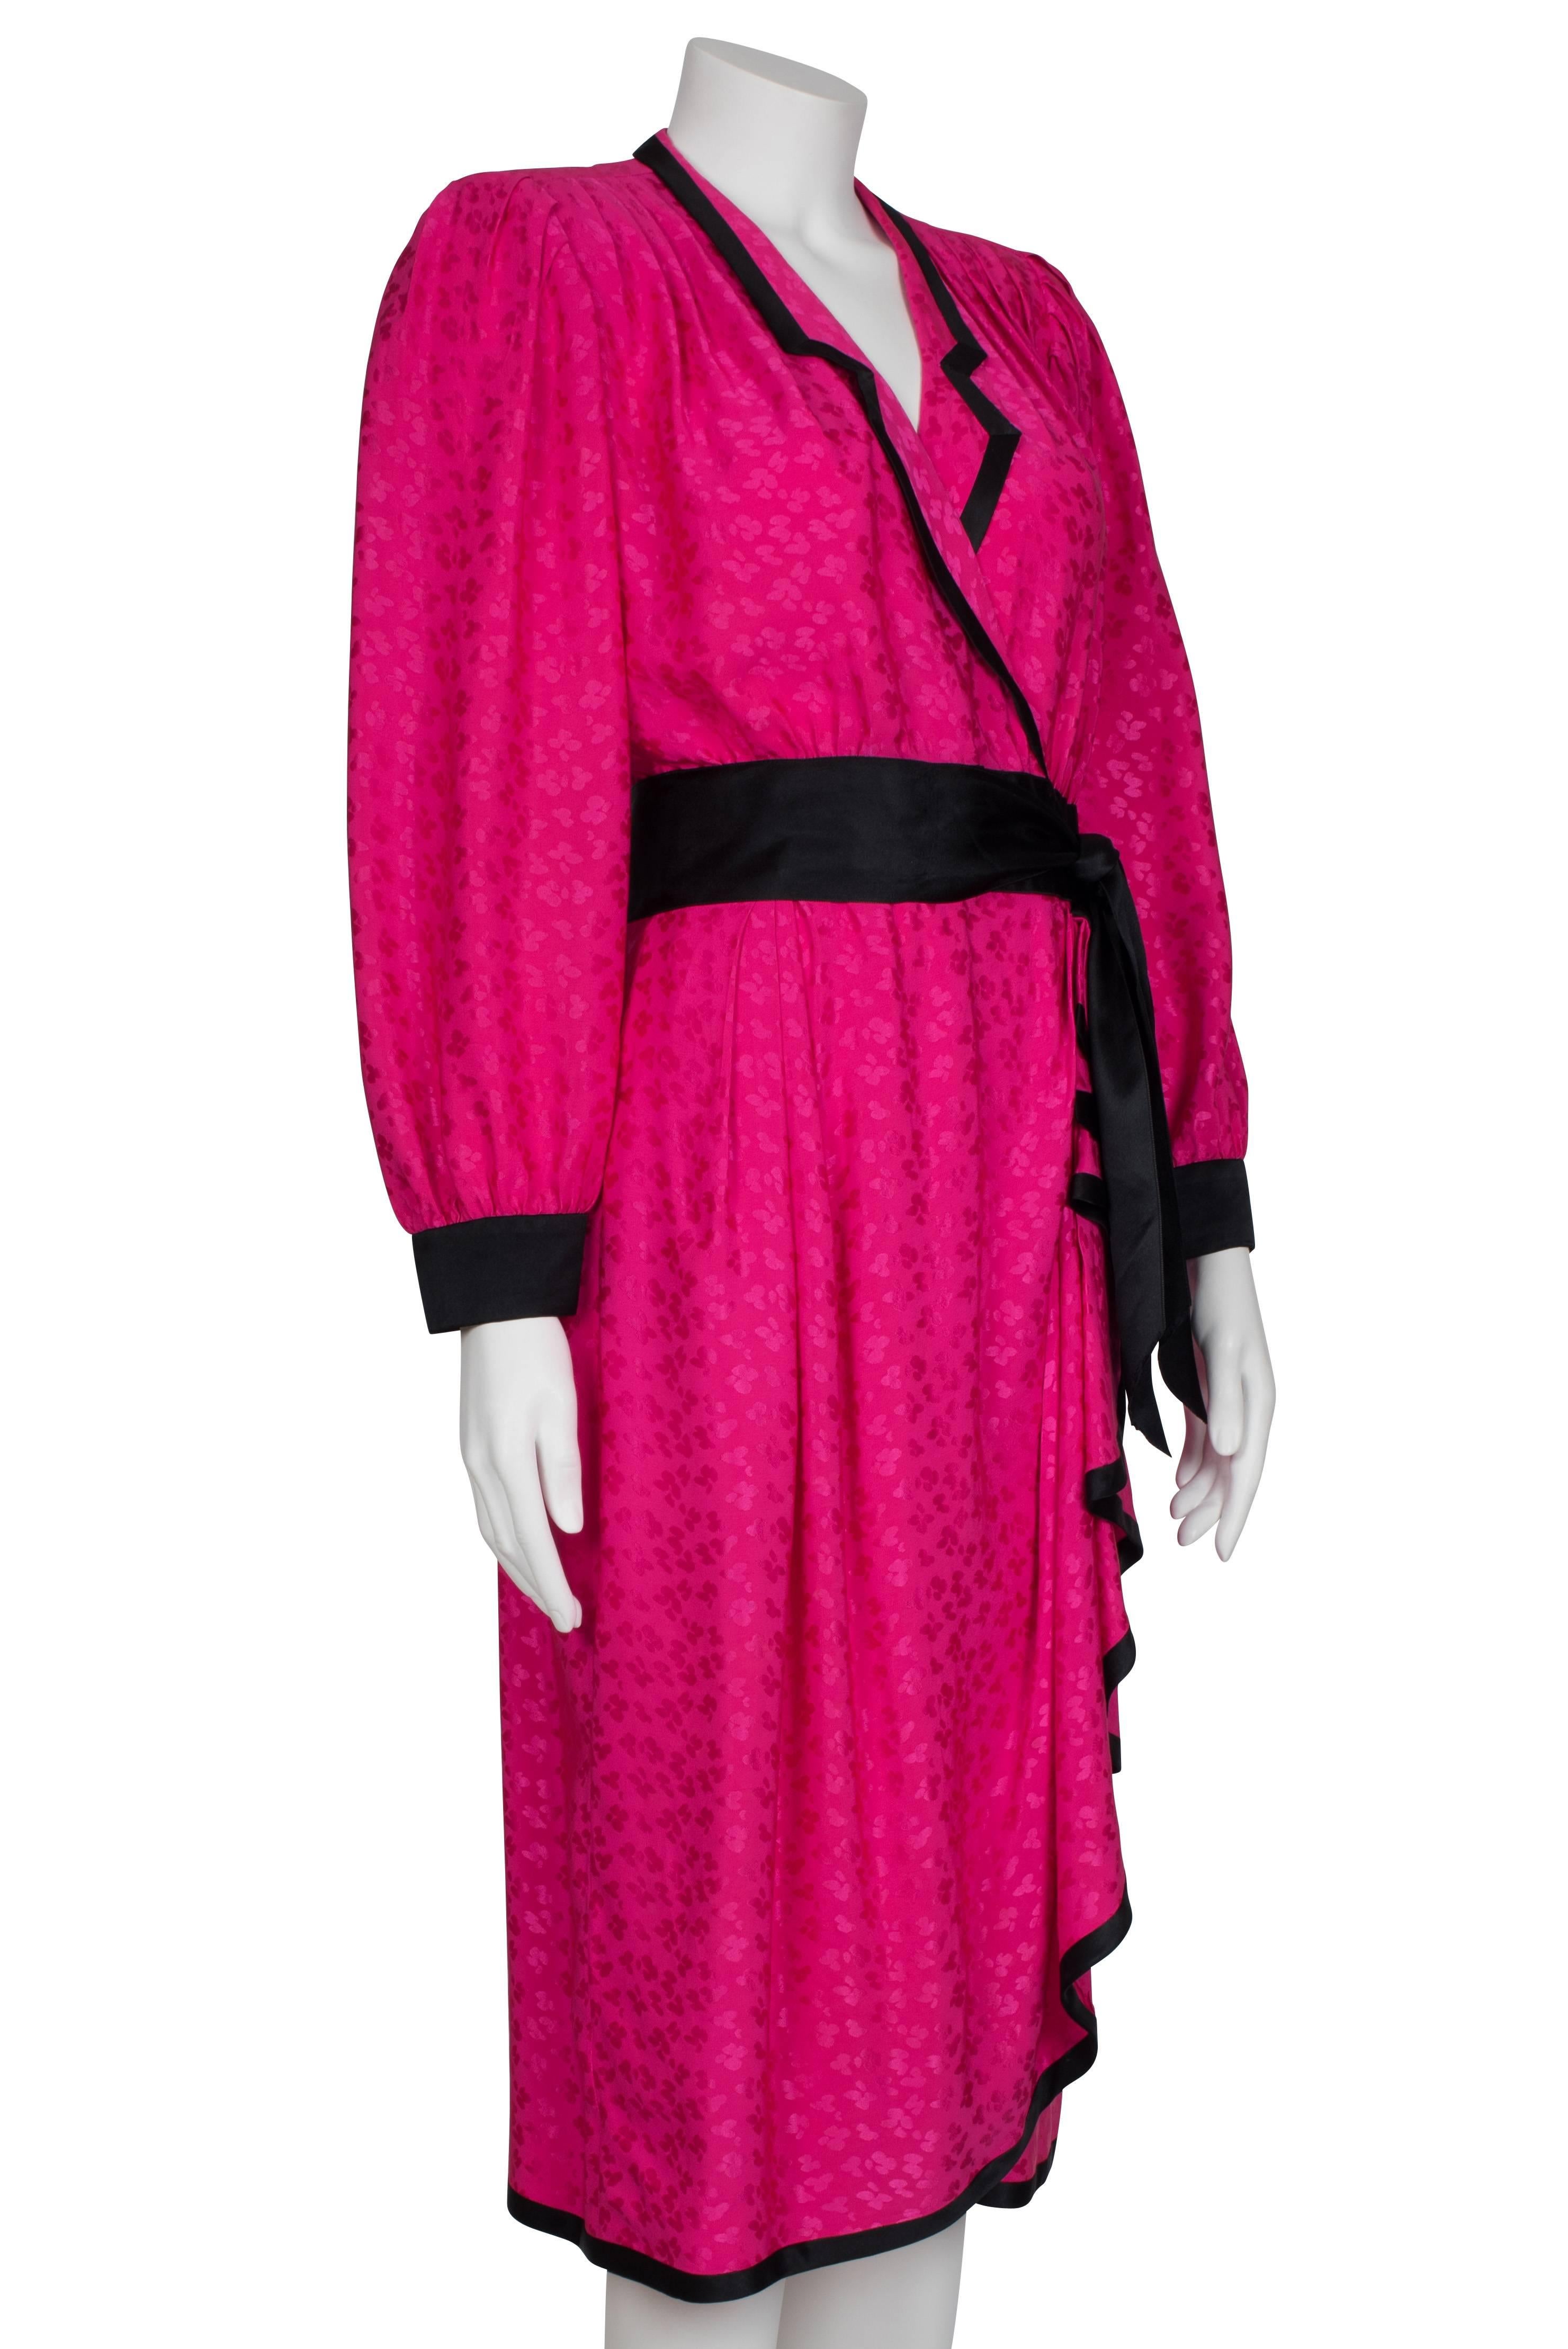 Women's Emanuel Ungaro Hot Pink Silk Wrap Dress ca 1980 For Sale